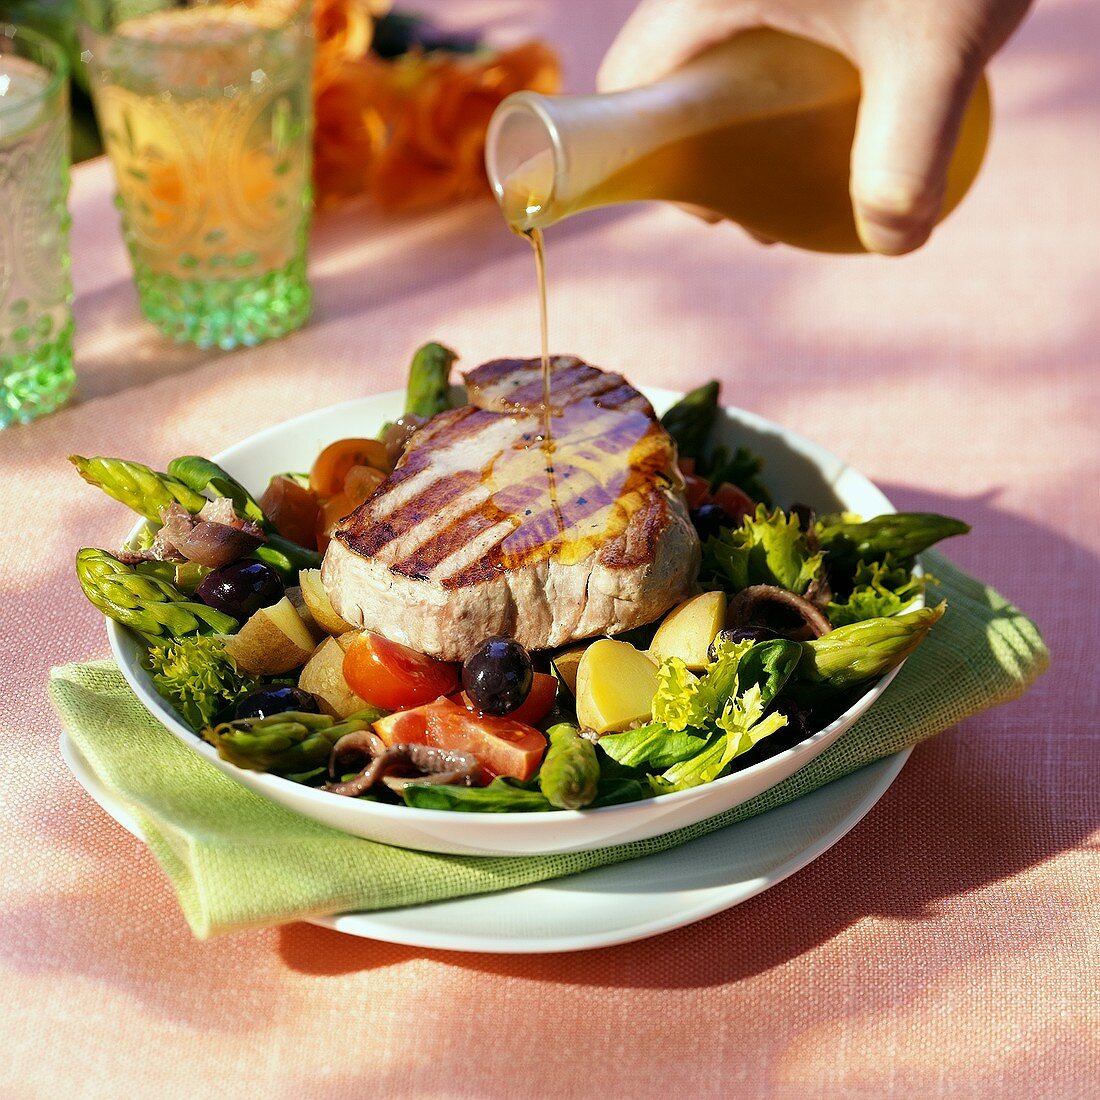 Pouring olive oil over tuna steak on vegetable salad